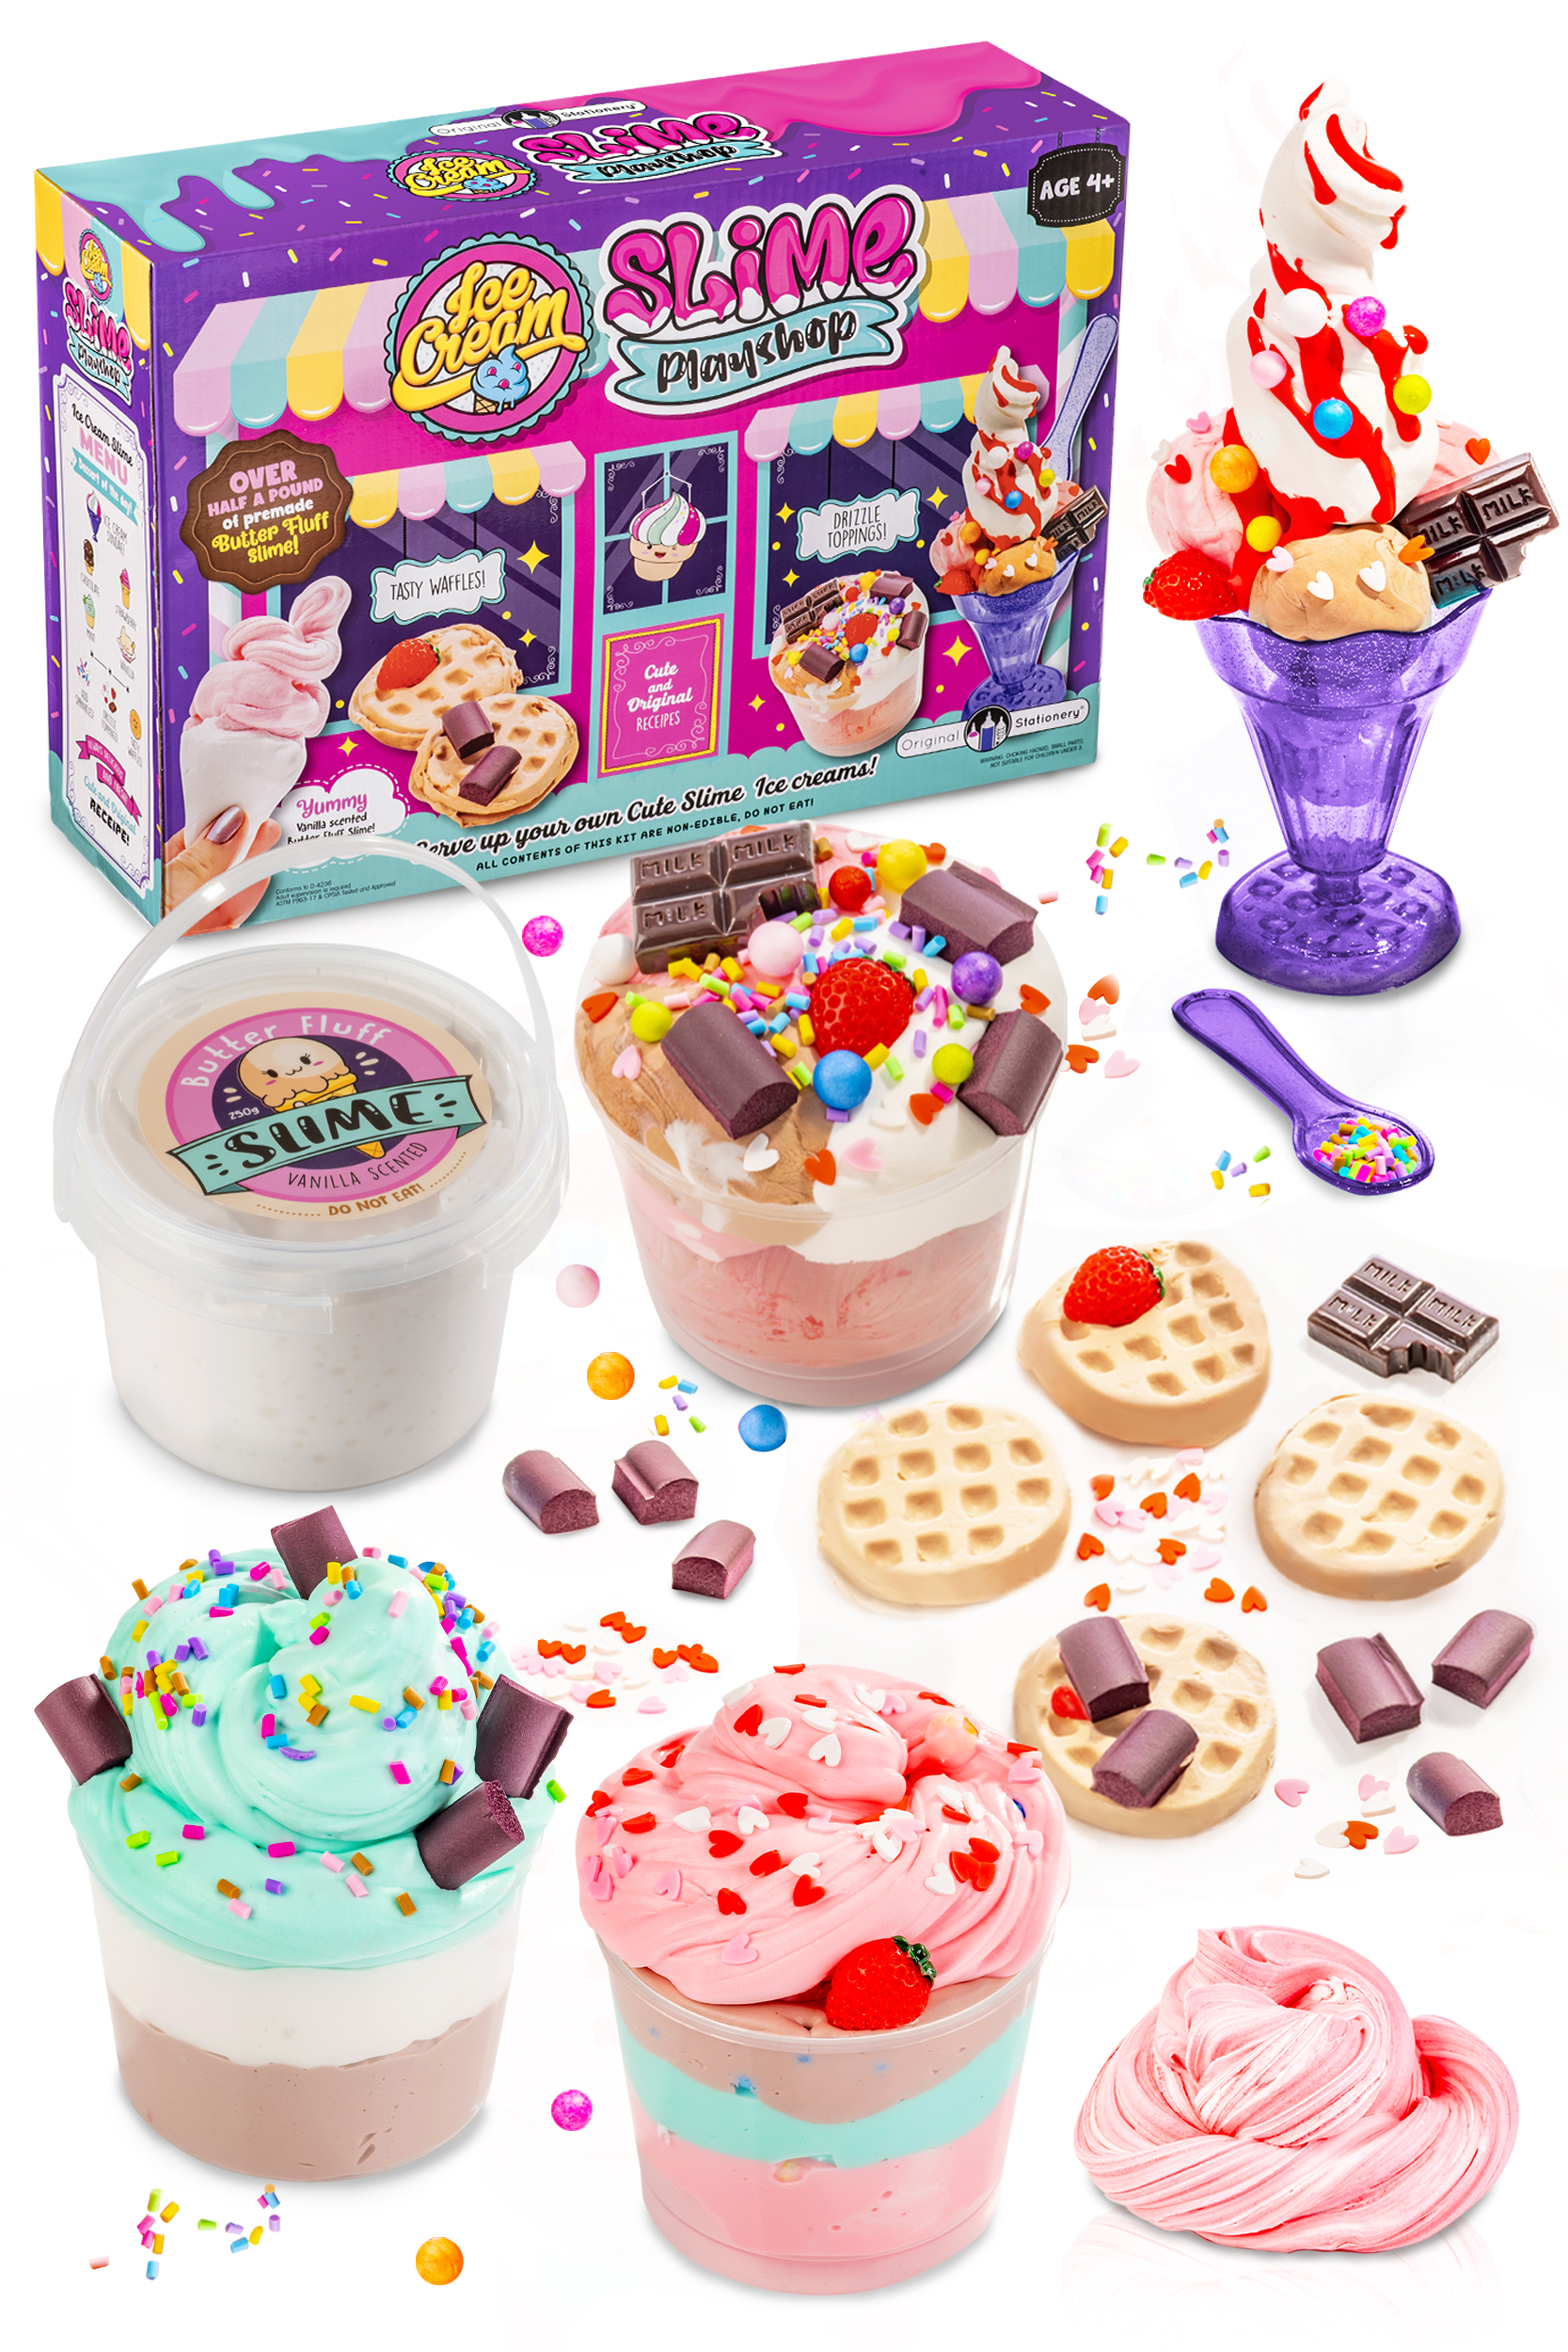 Original Stationery Ice Cream Slime Kit Playshop to Make Fun Pink